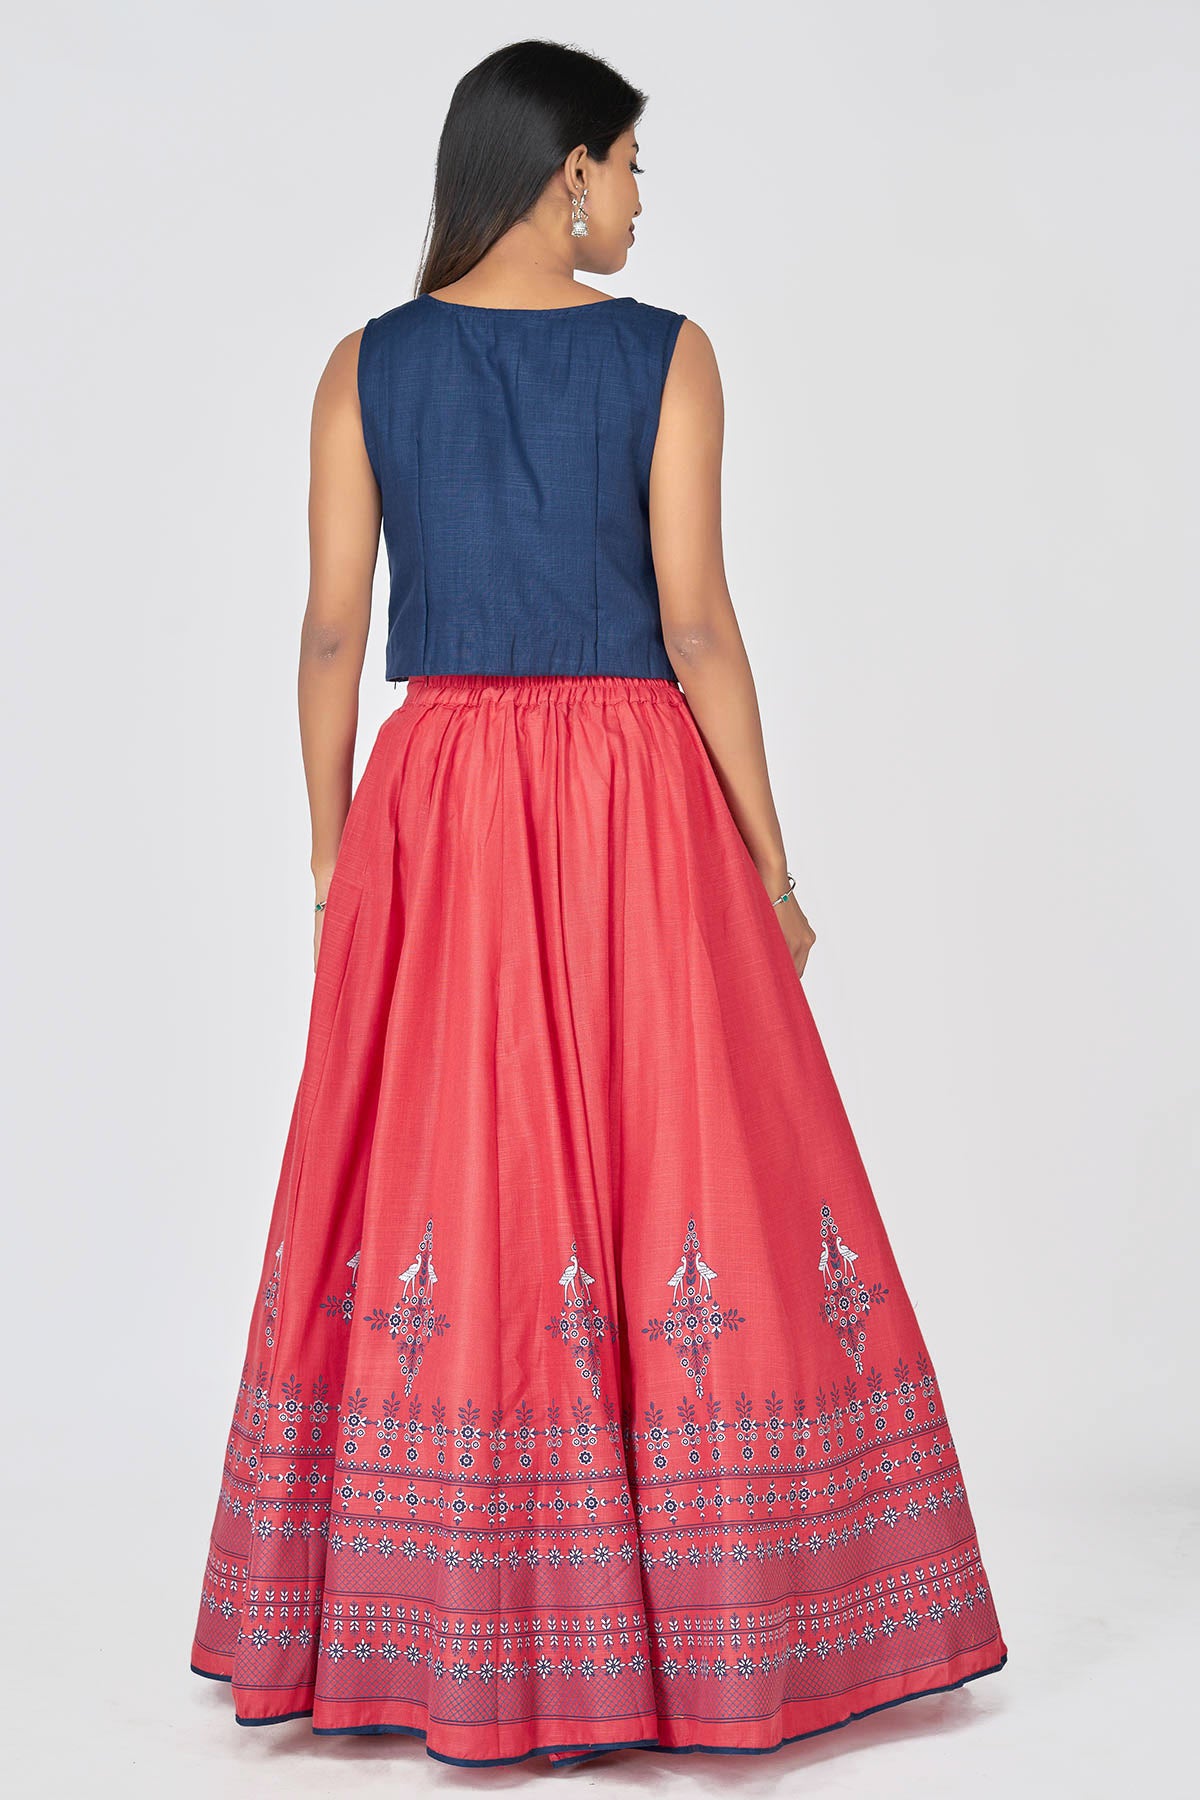 Floral Printed Women's Crop Top & Skirt Set - Navy blue & Coral